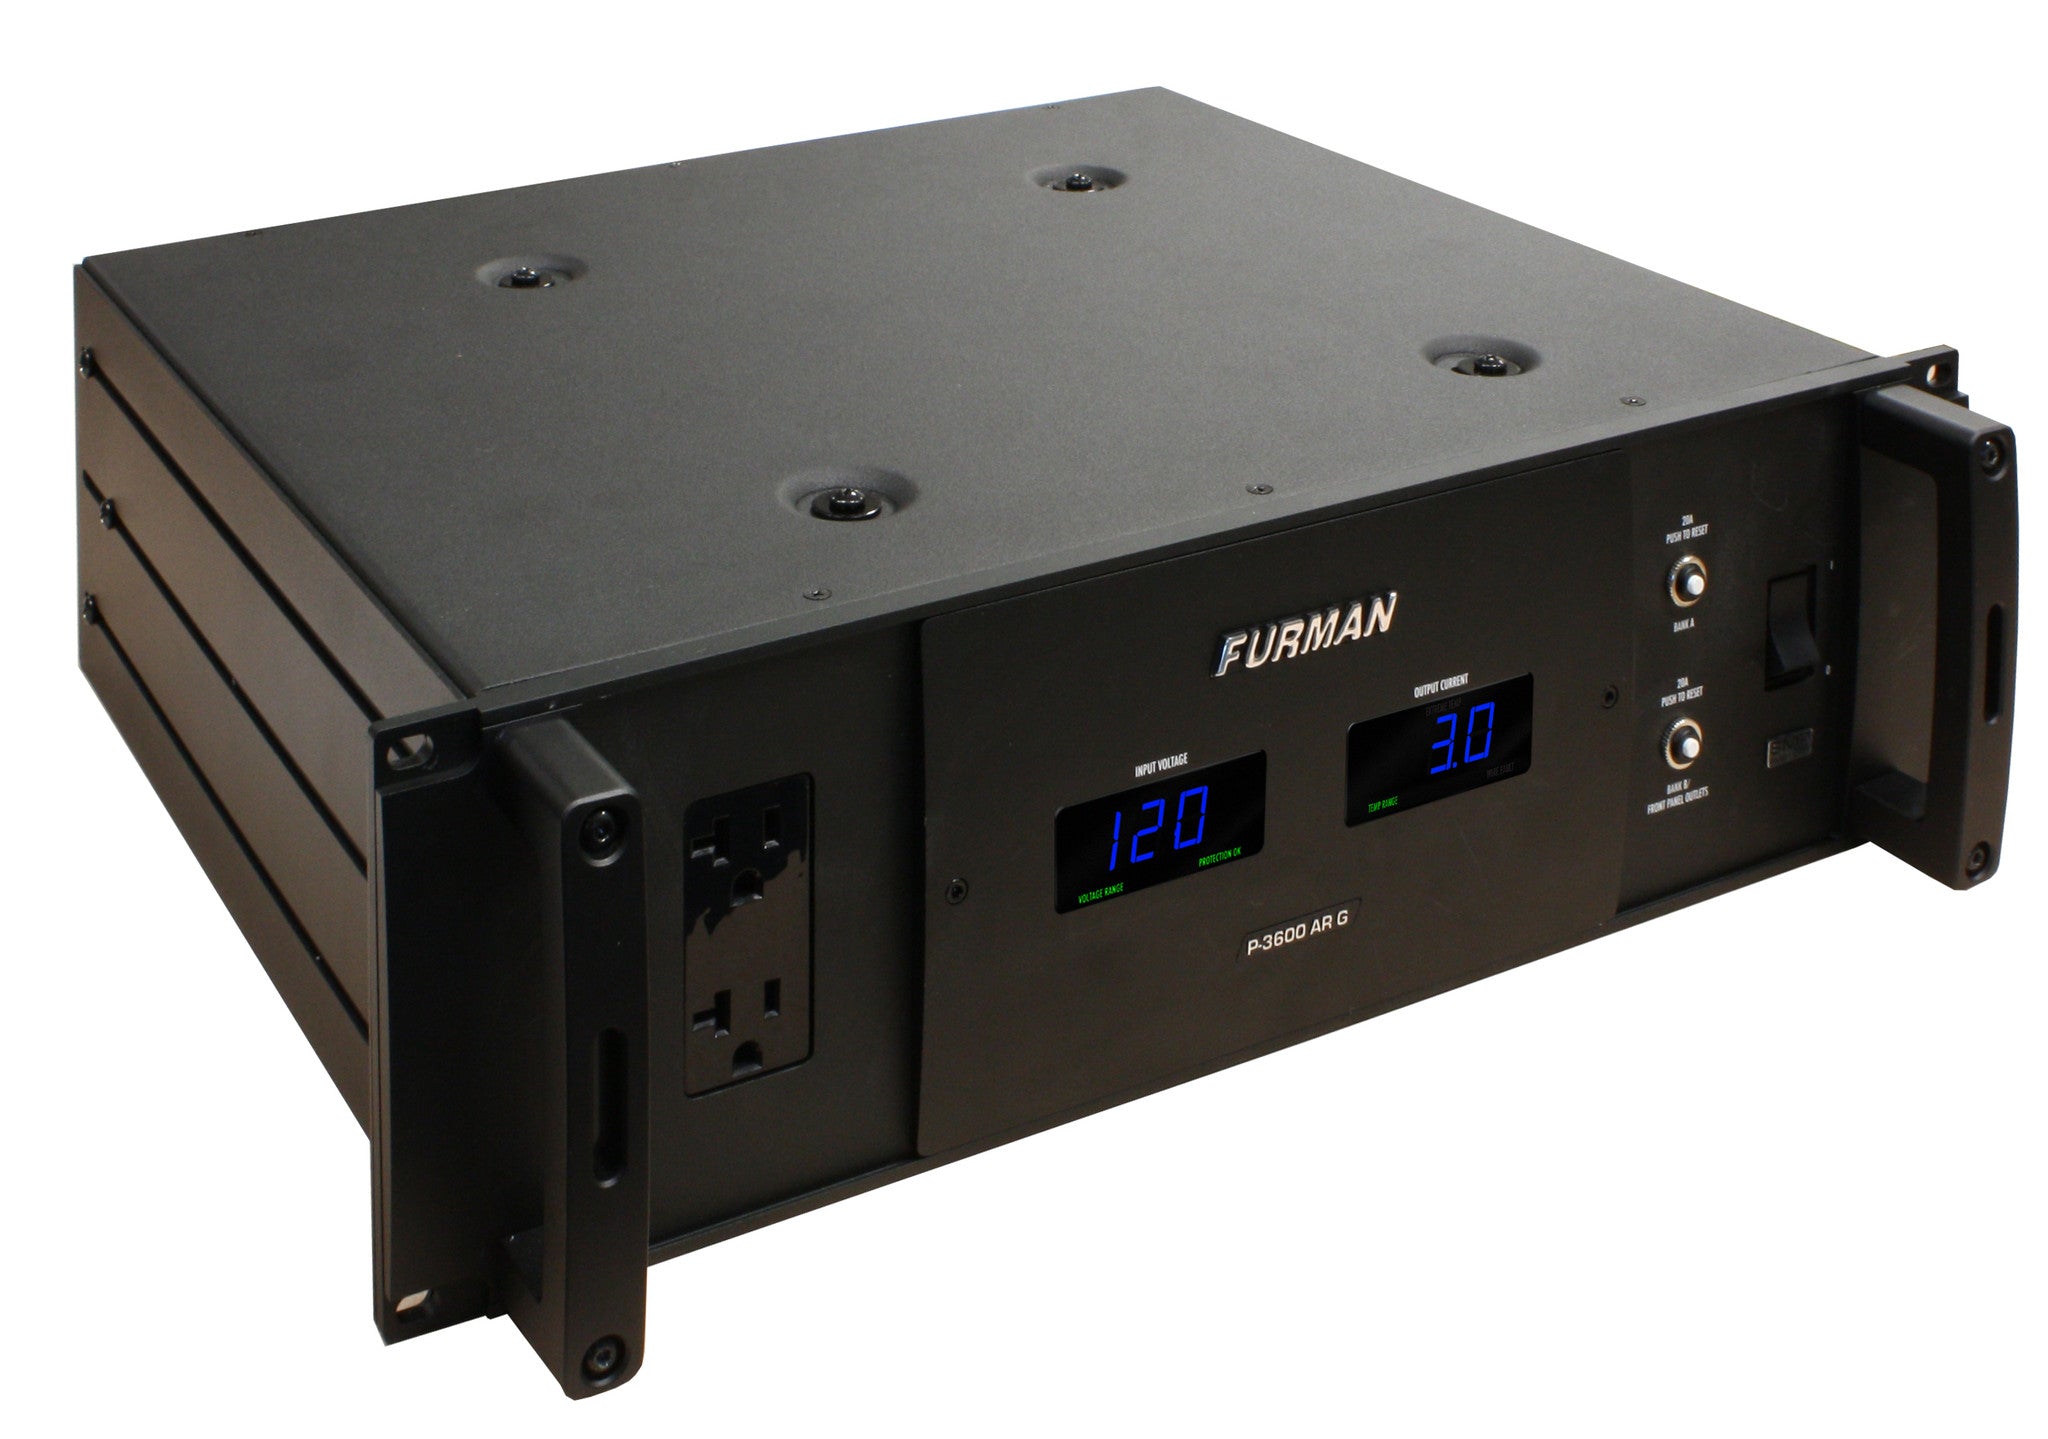 Accessories - Furman - Furman Sound P-3600 AR G - Professional Audio Design, Inc